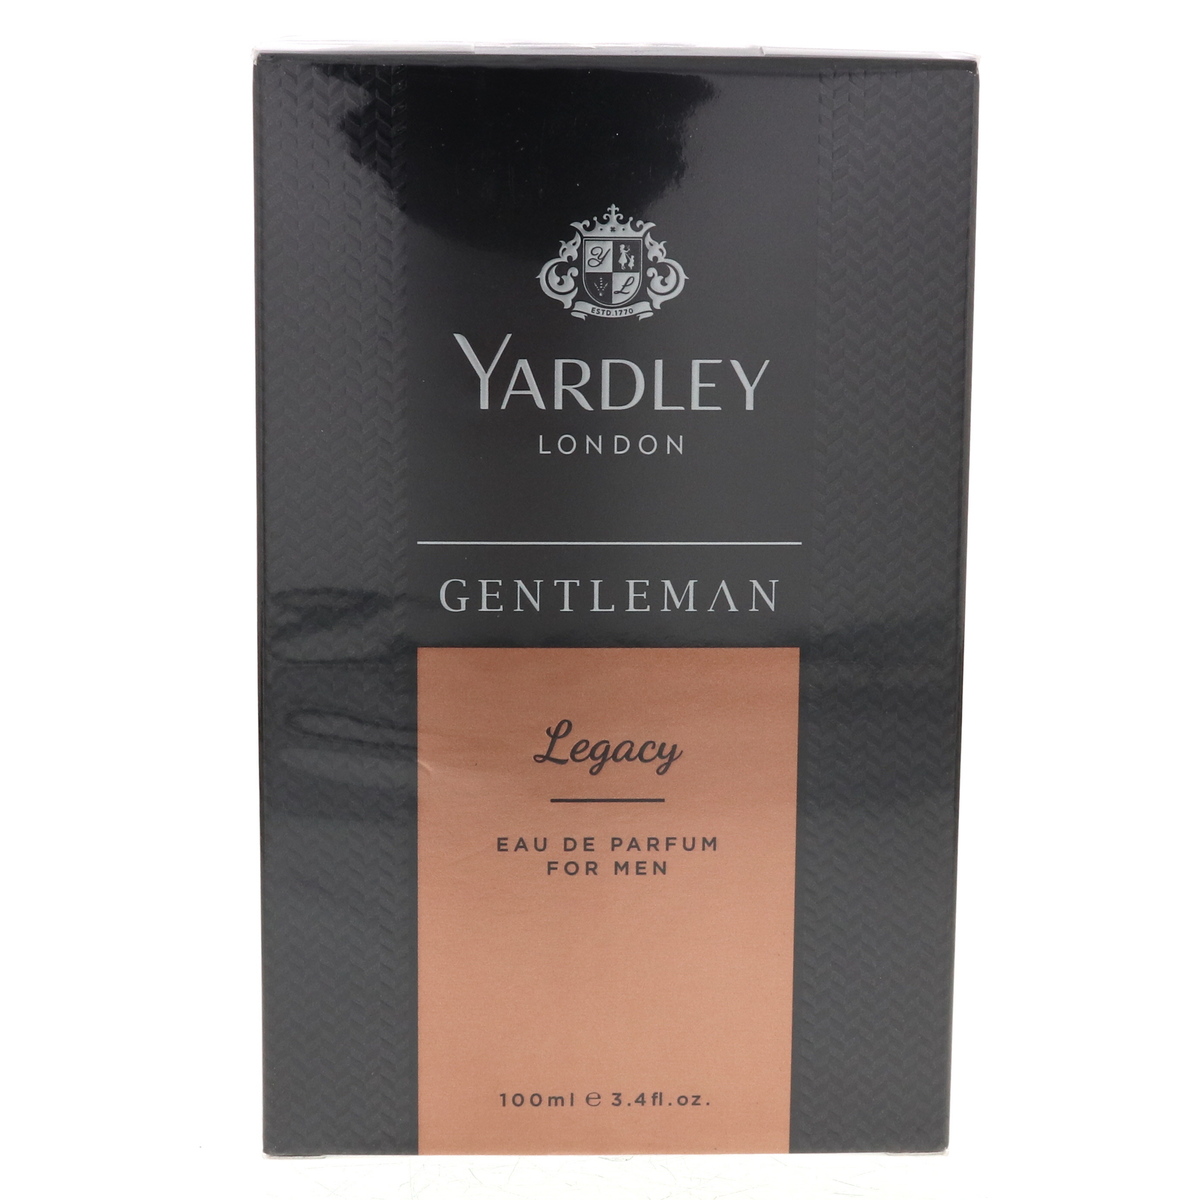 Yardley Gentleman Legacy Eau De Parfum For Men 100ml